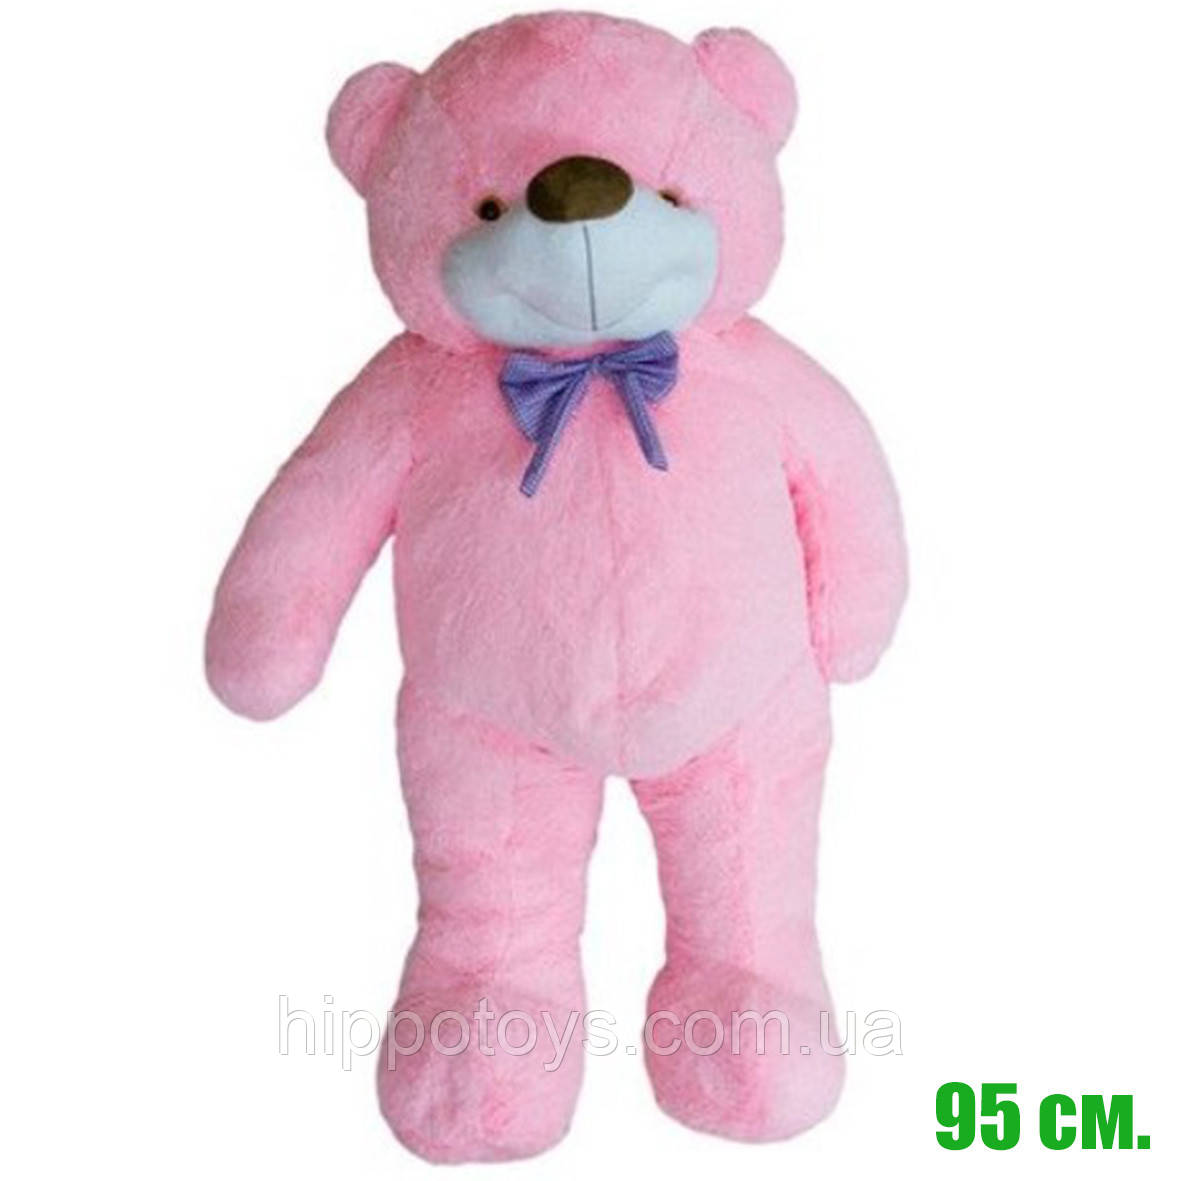 М'яка іграшка Ведмідь 95 см Великий рожевий плюшевий ведмедик Ведмедик на подарунок 5755